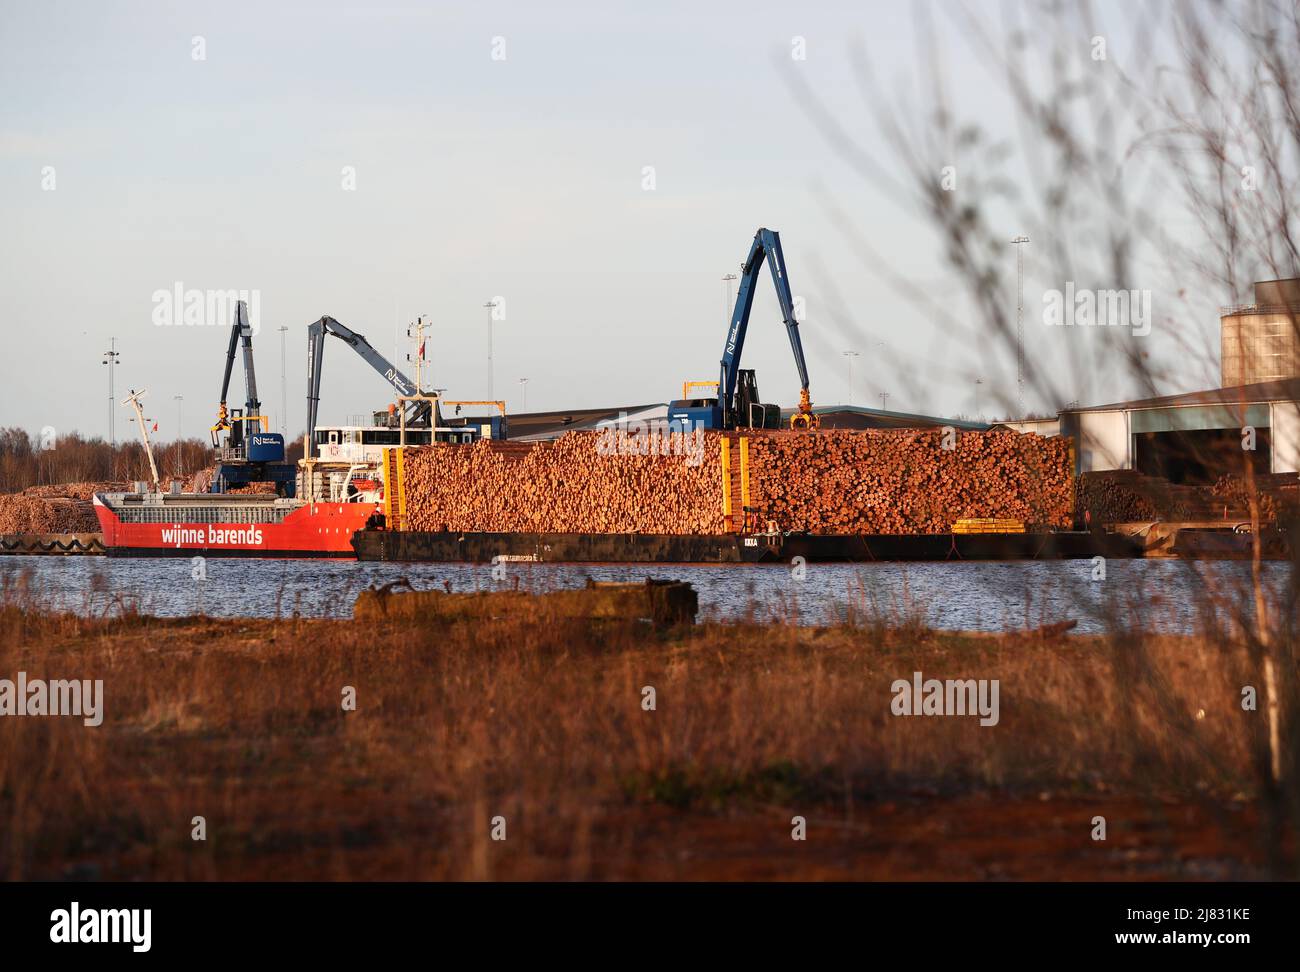 Loading of timber in the port of Norrköping, Norrköping, Sweden. Stock Photo